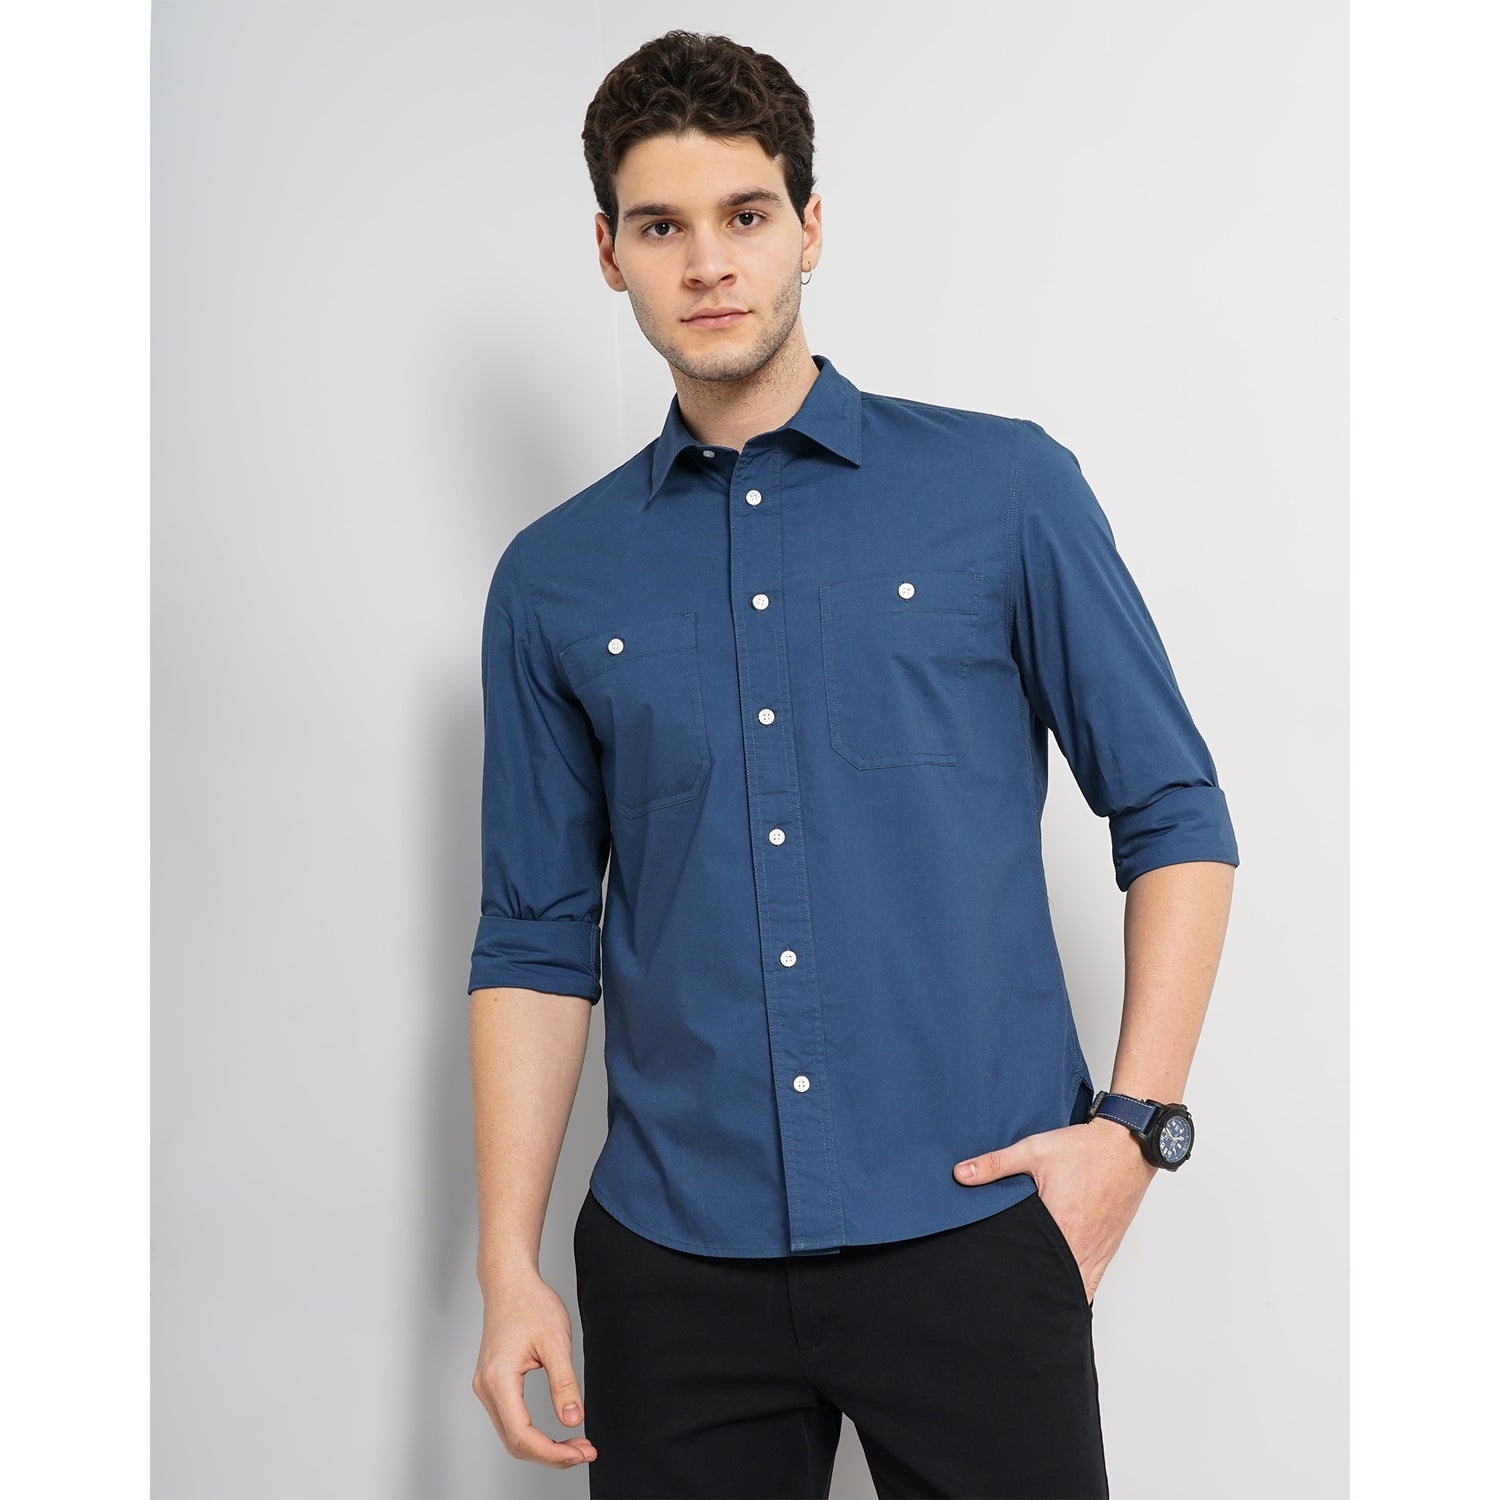 Men Blue Solid Regular Fit Cotton Casual Shirt (GAGUSTI2)